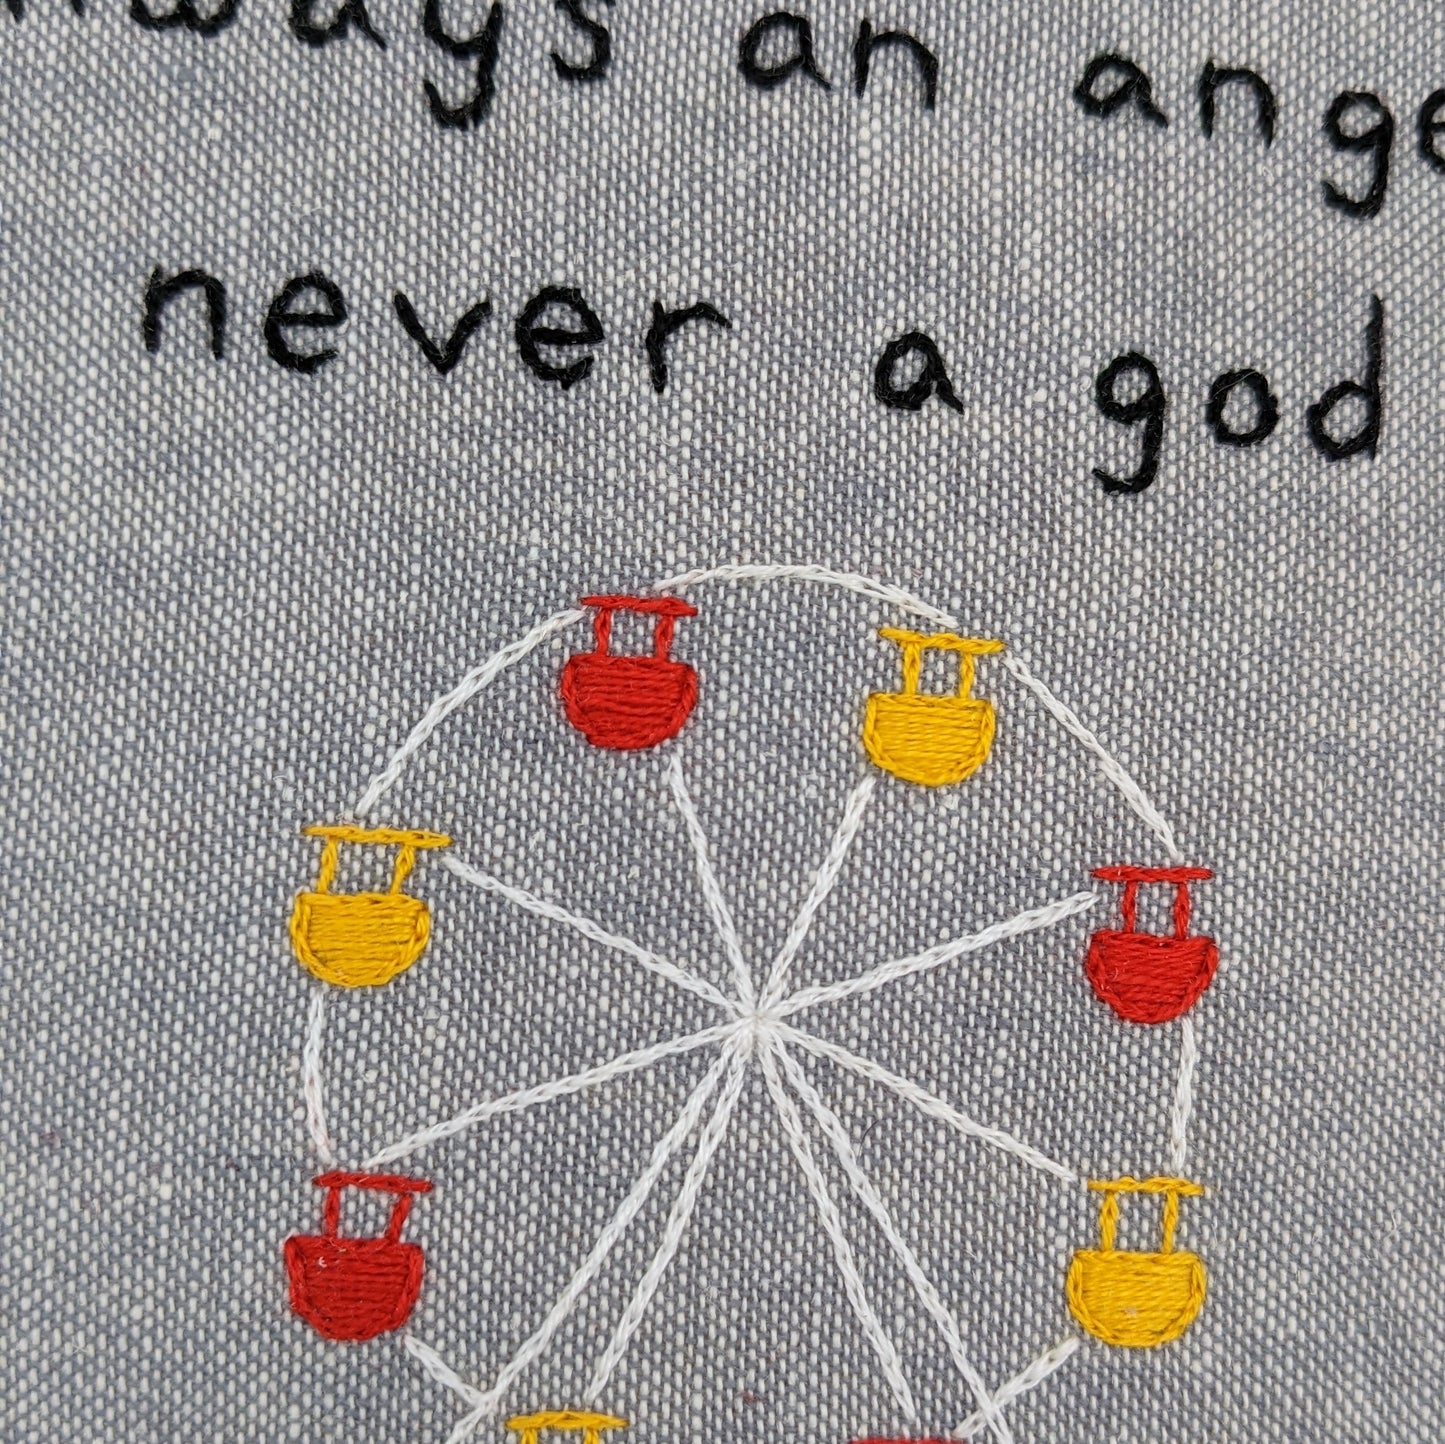 Boygenius "Not Strong Enough" Lyric Embroidery Hoop Art